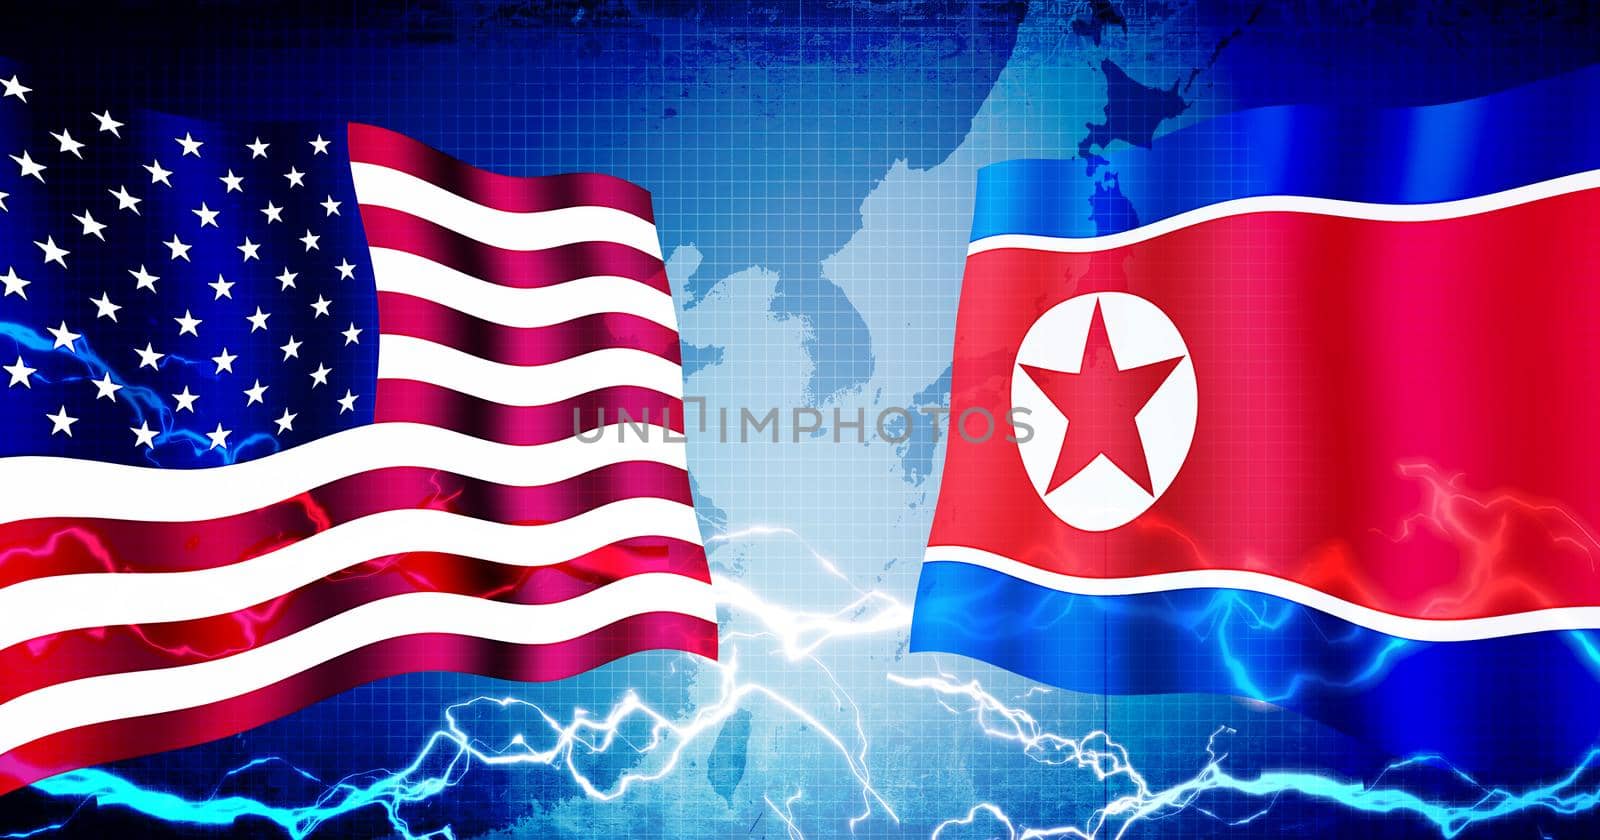 Political confrontation between USA and North korea / web banner background illustration